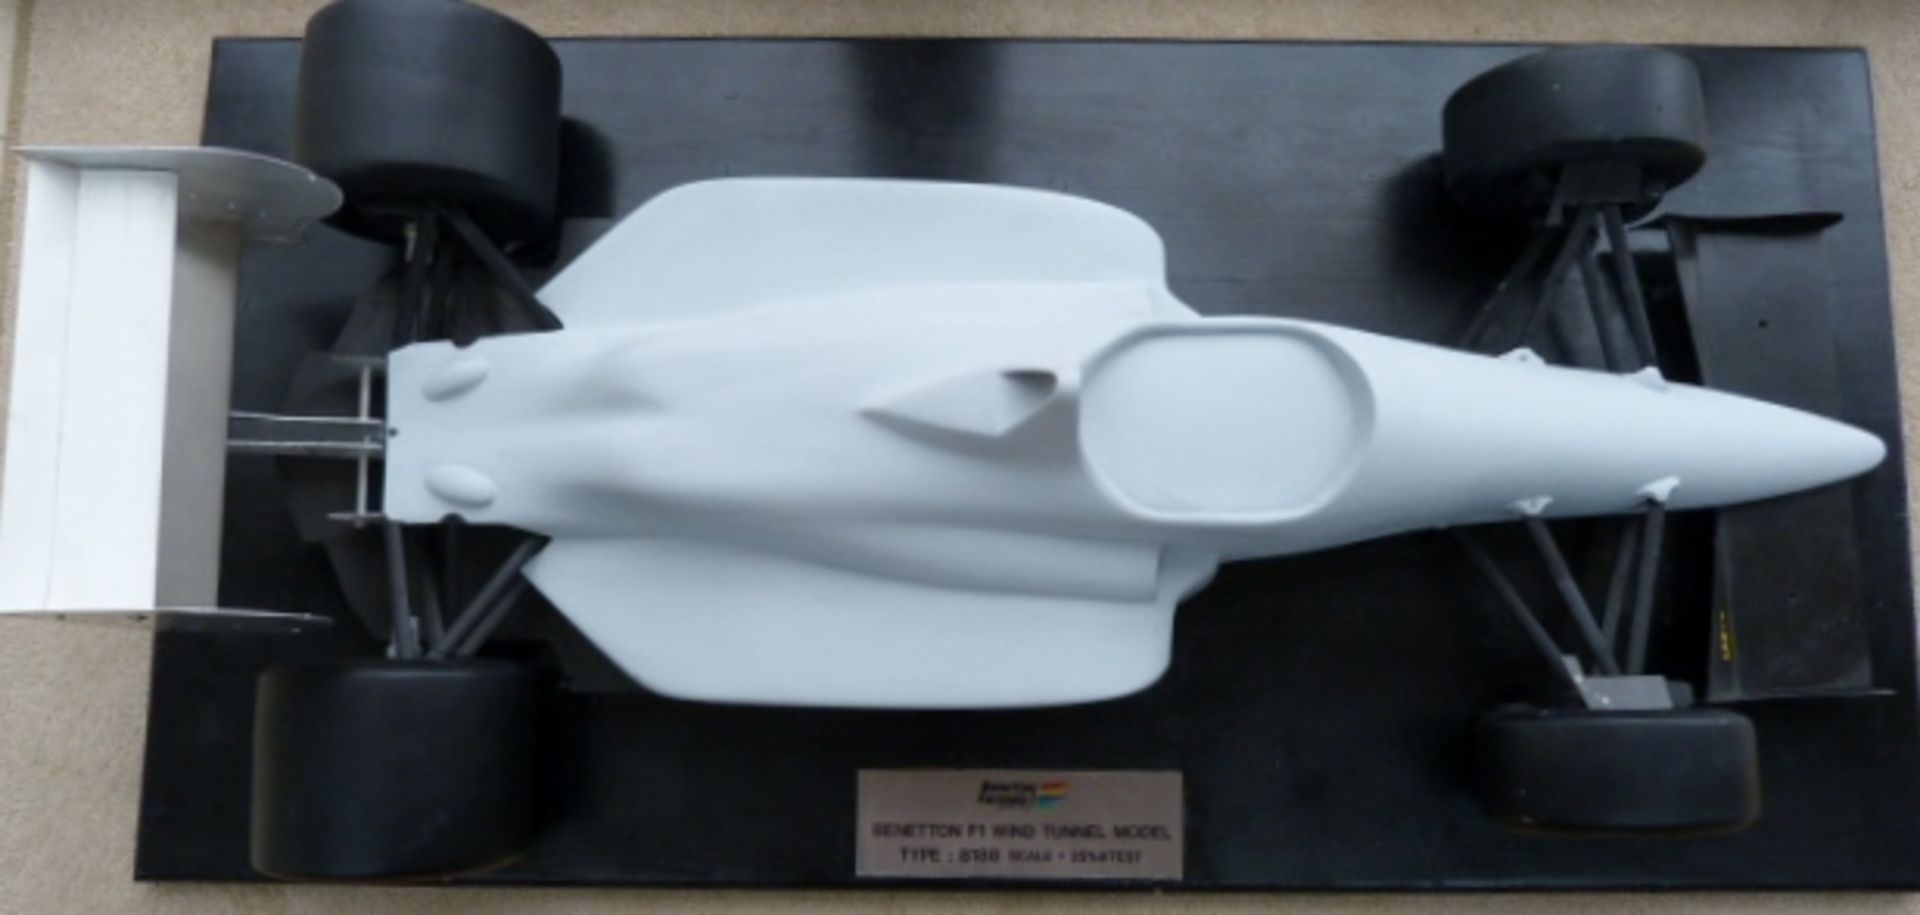 Benetton F1 wind tunnel model. - Image 2 of 3